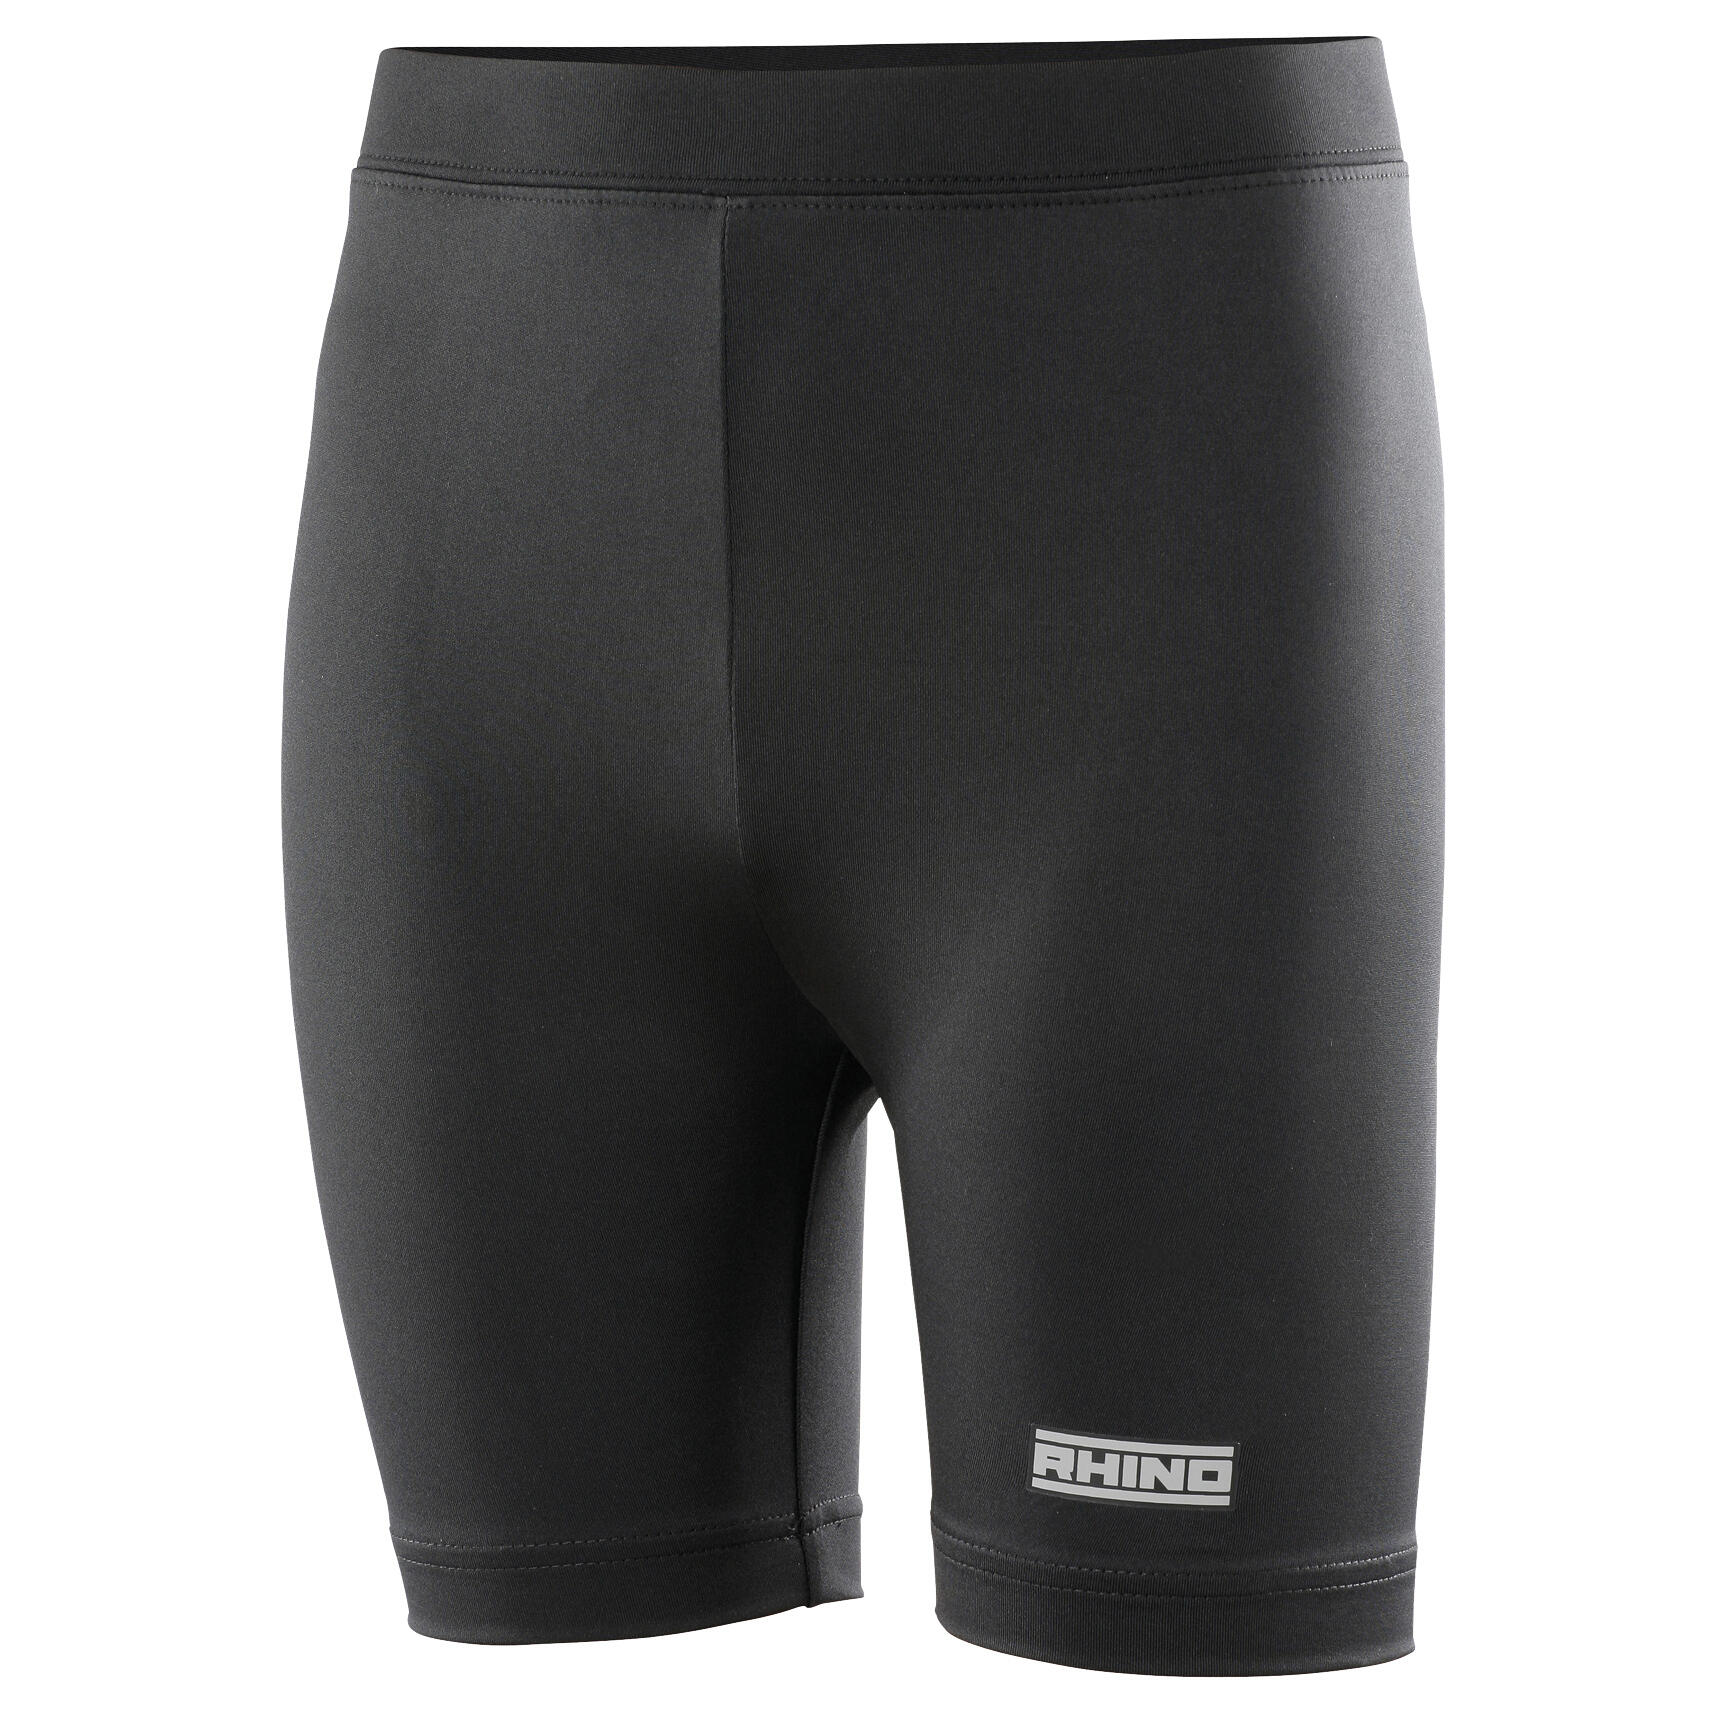 Childrens Boys Thermal Underwear Sports Base Layer Shorts (Black) 1/3